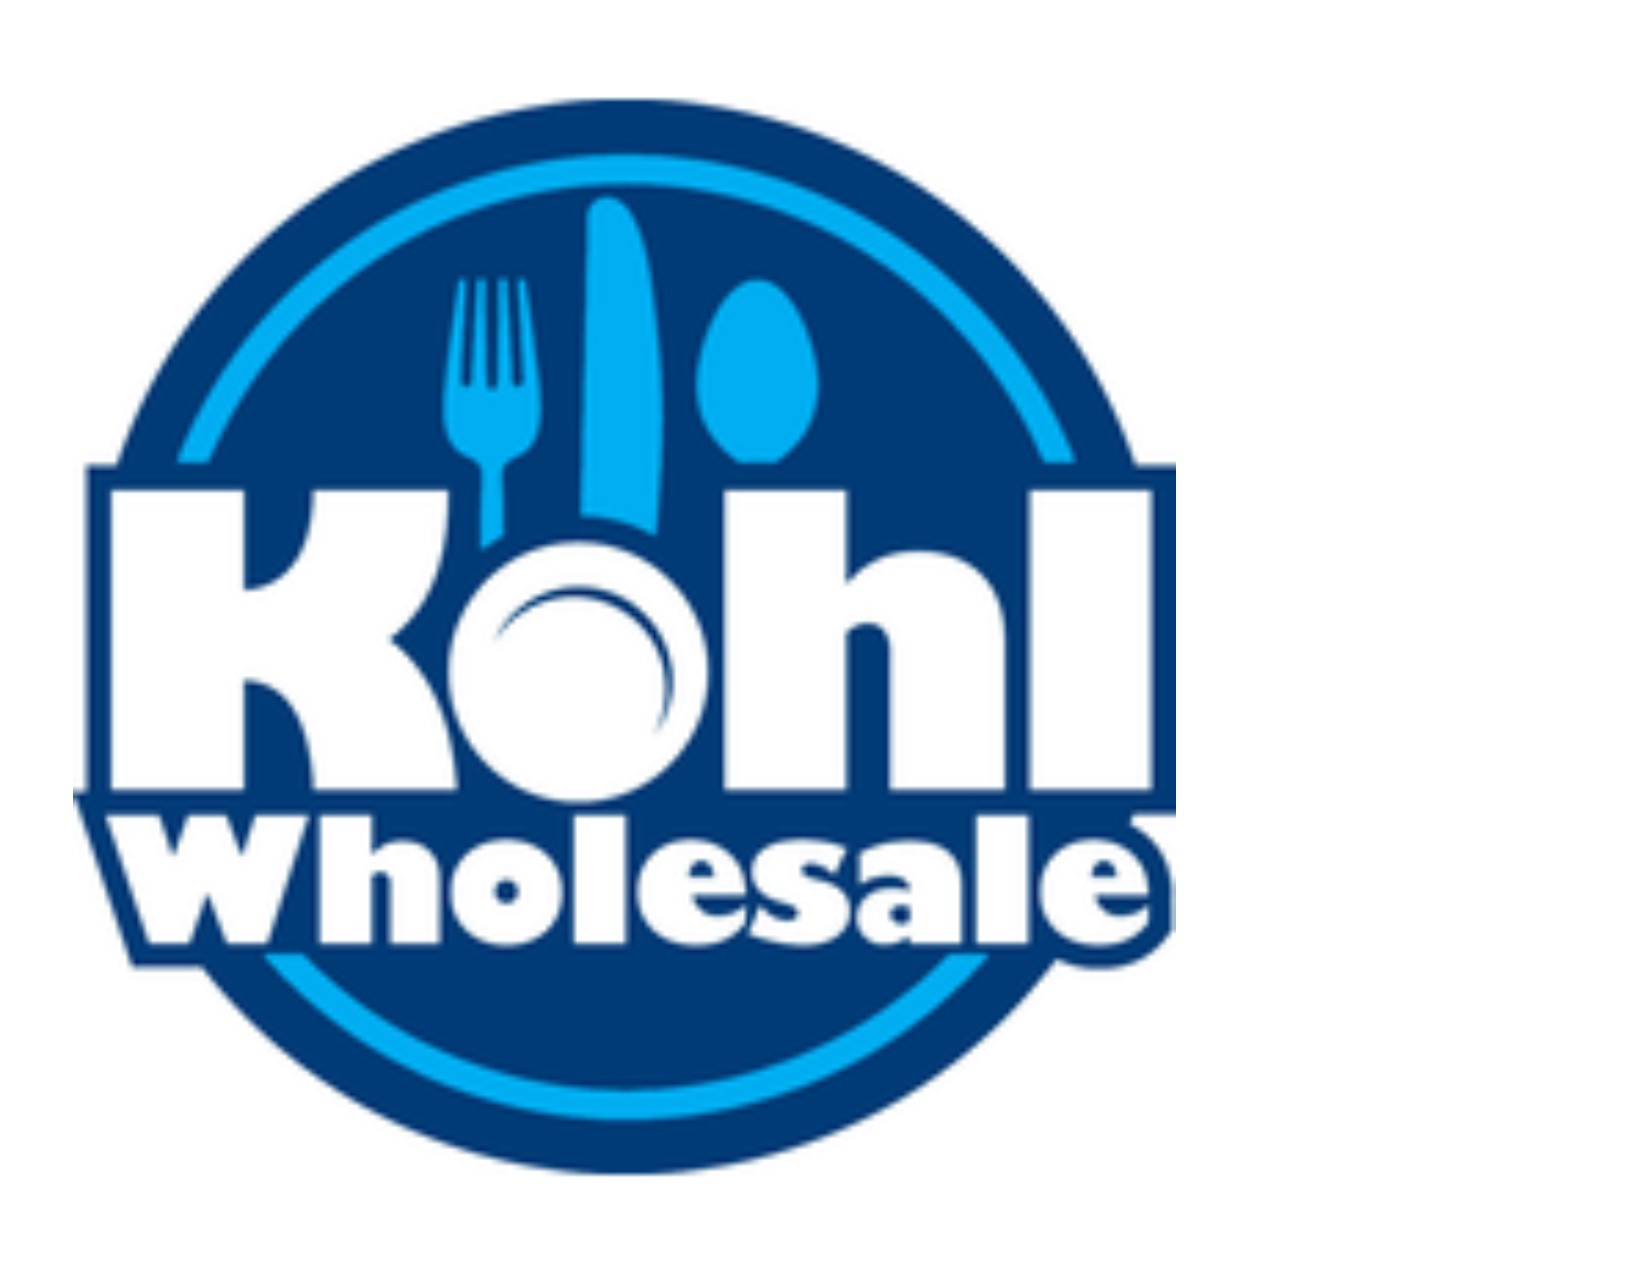 Kohl Wholesale